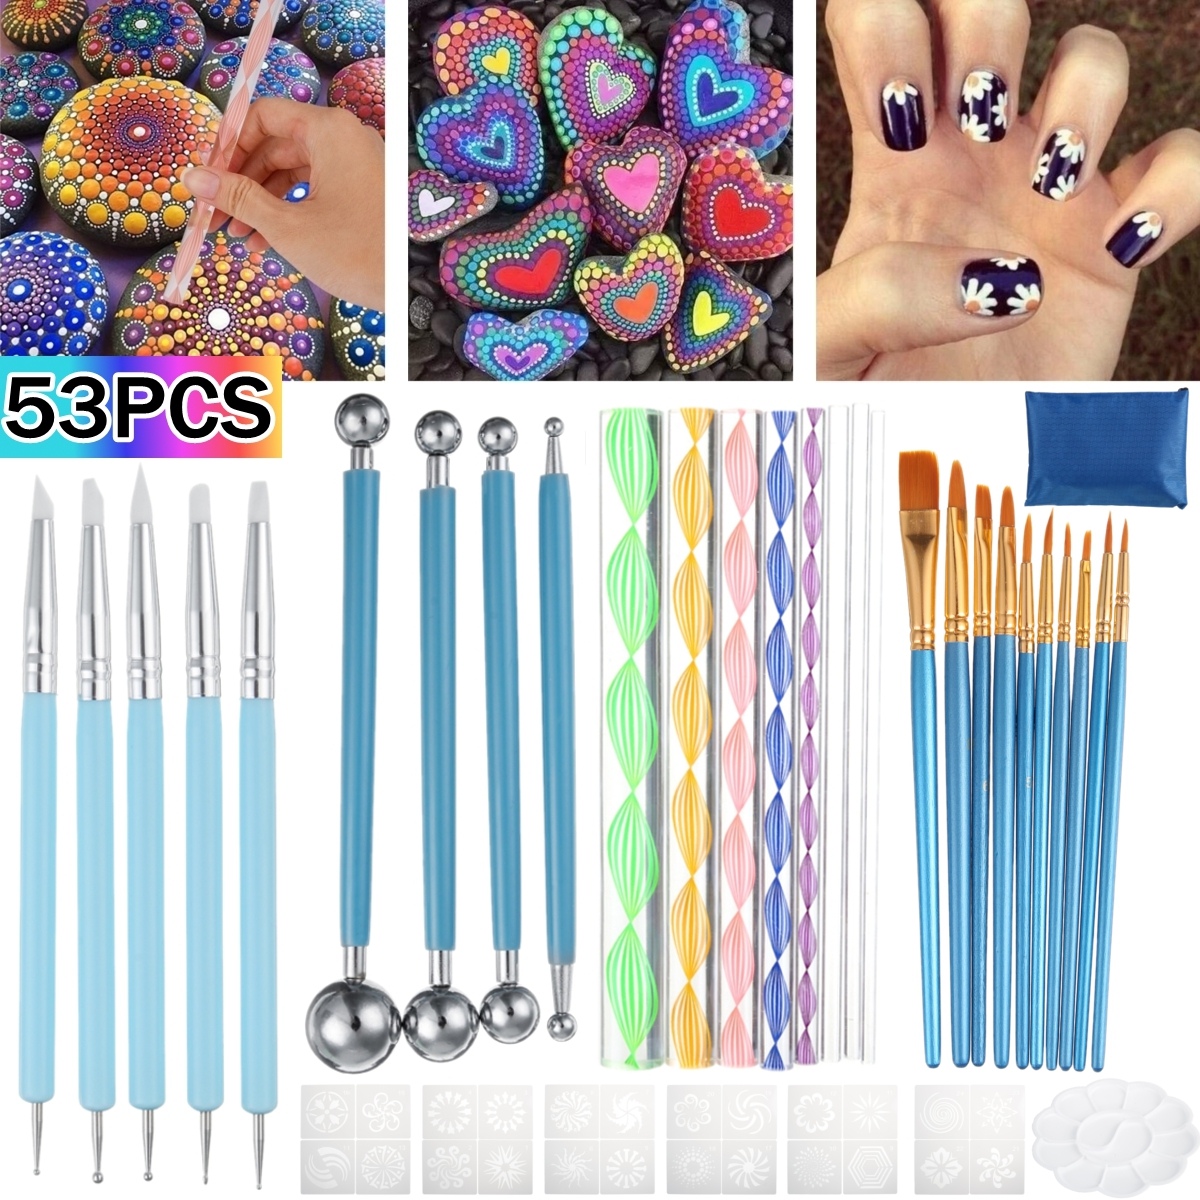 53Pcs-Mandala-Dotting-Tools-Set-Rock-Painting-Kit-Nail-Art-Craft-Pen-Paint-Stencil-Supplies-Stone-Ma-1783953-1